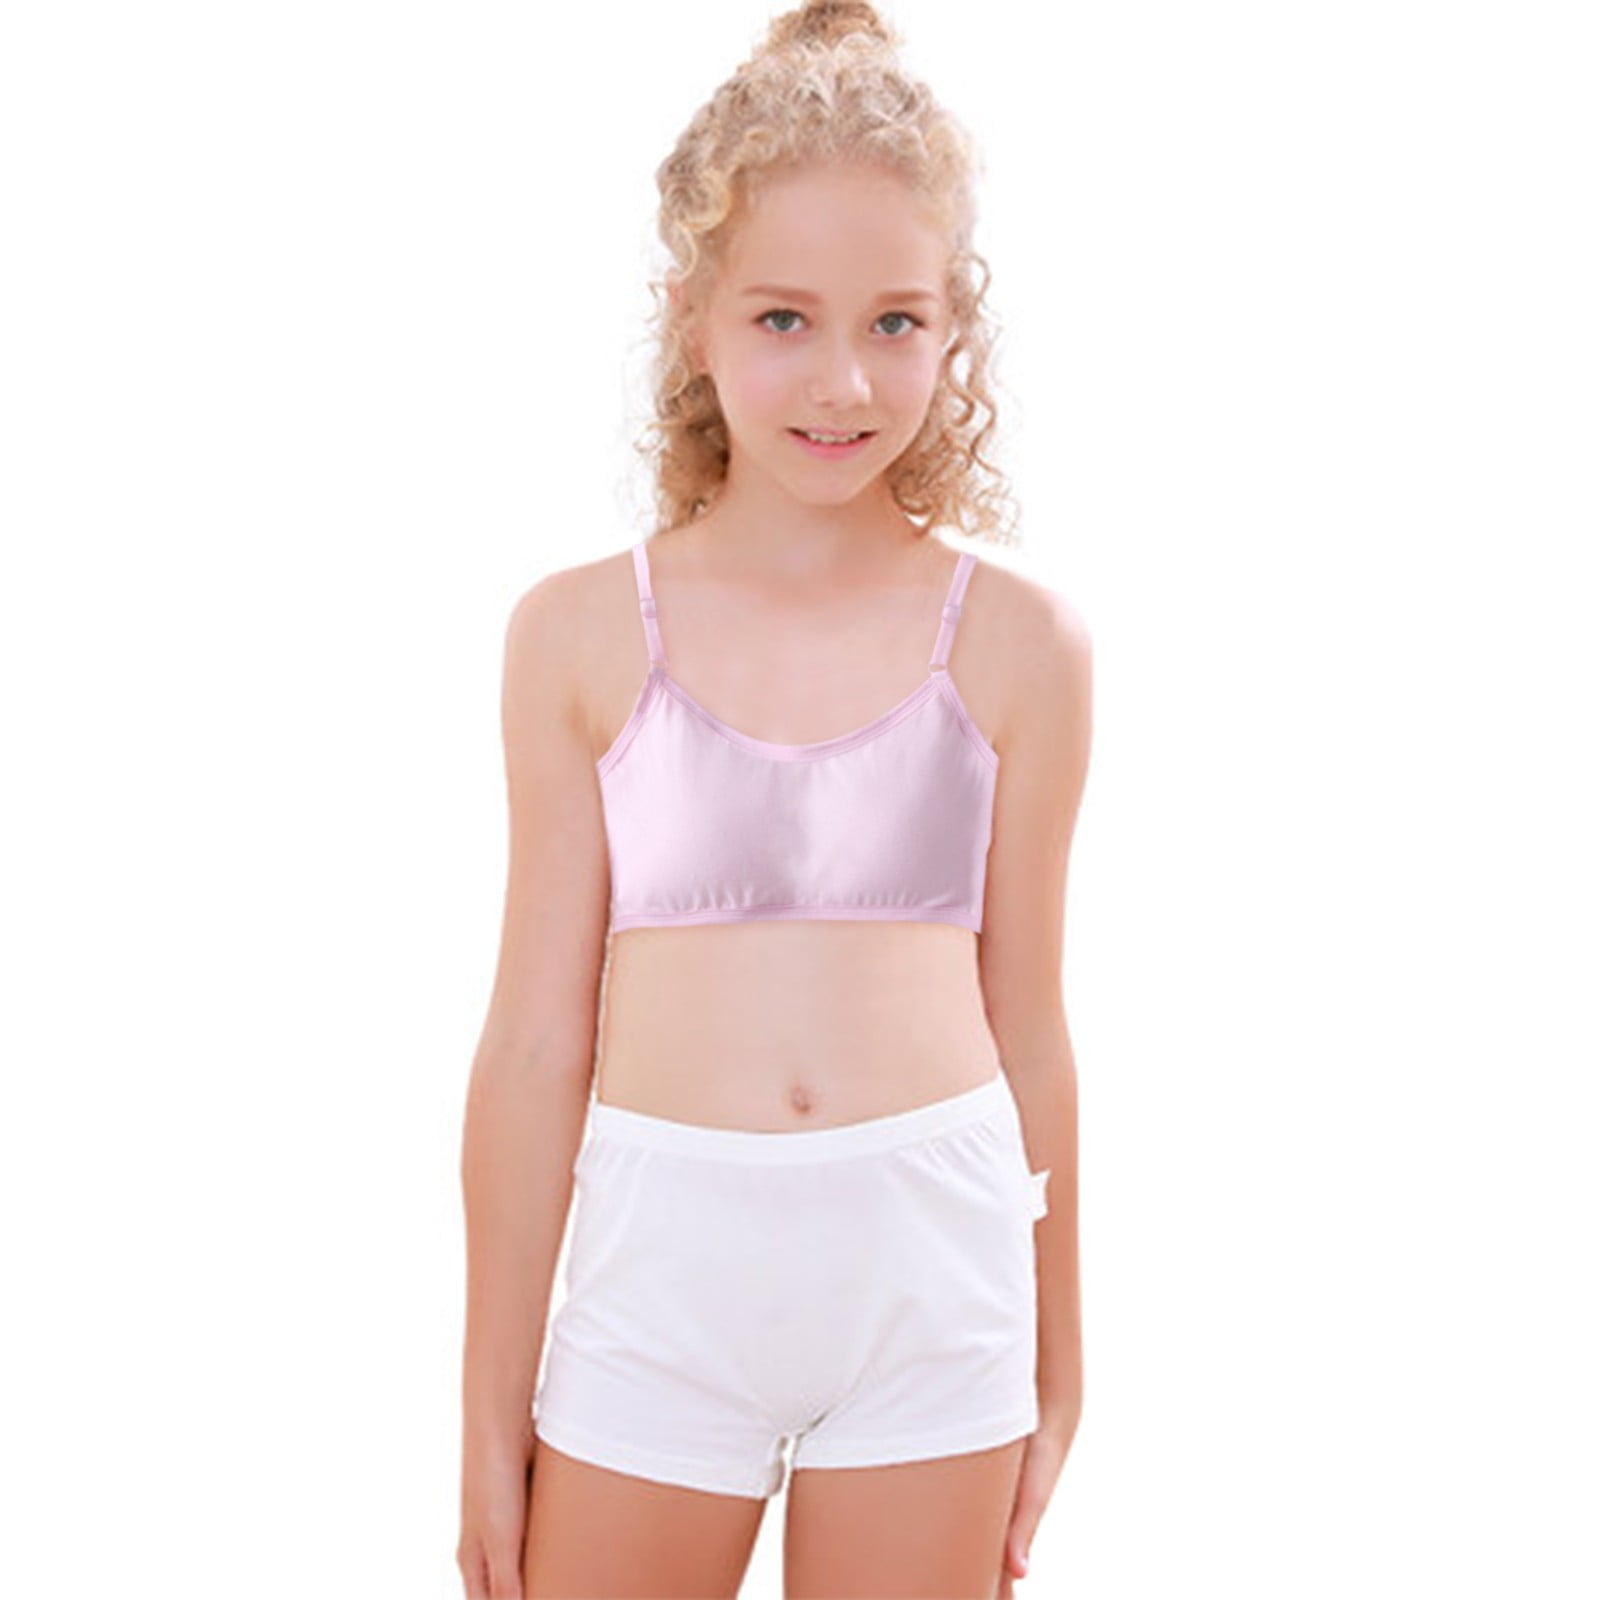 Cami Training Bras, Sports Tank Tops & Underwear For Girls Aged 9-15